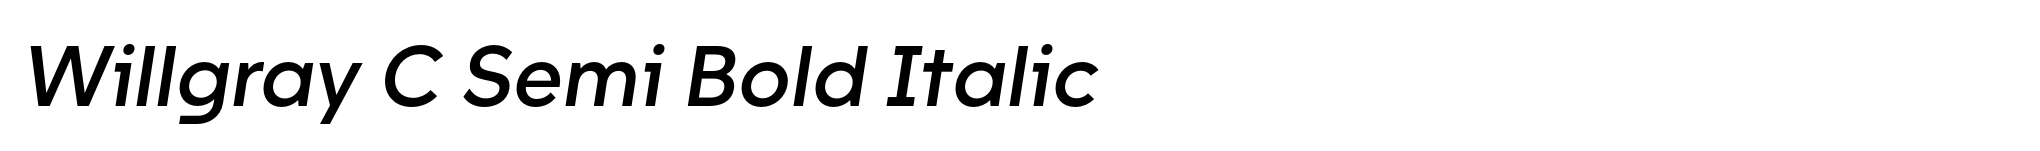 Willgray C Semi Bold Italic image